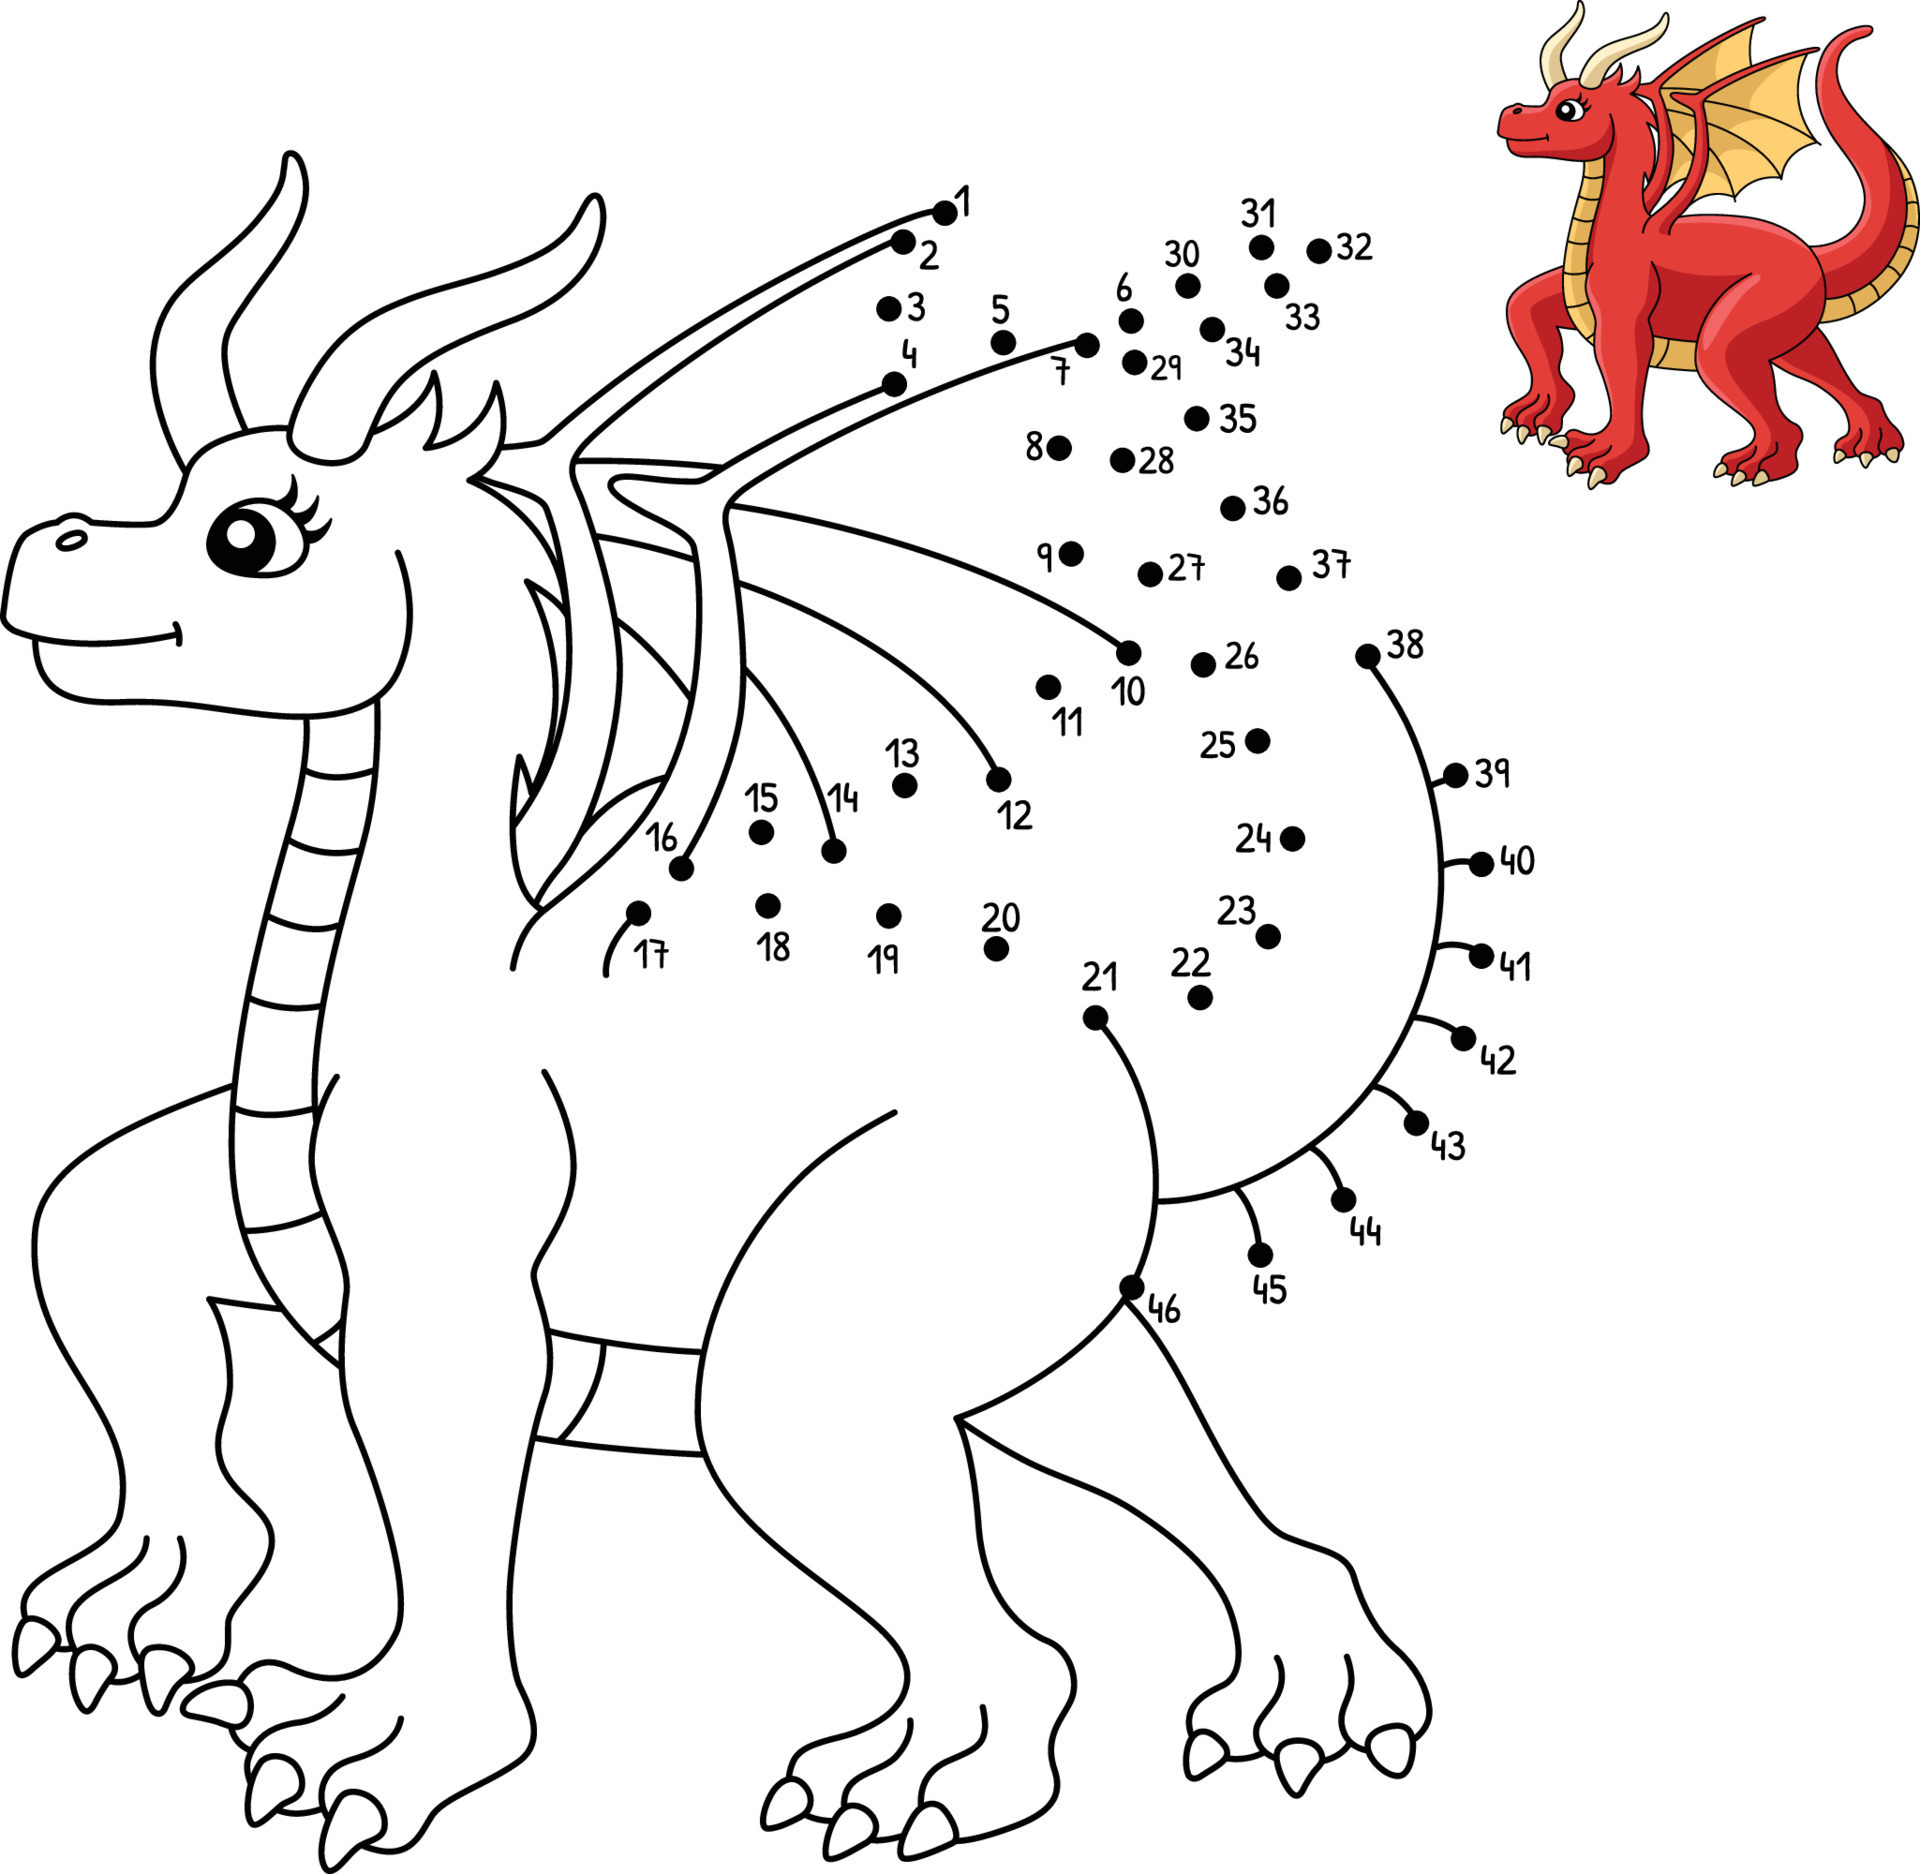 dot-to-dot-walking-female-dragon-coloring-page-10789153-vector-art-at